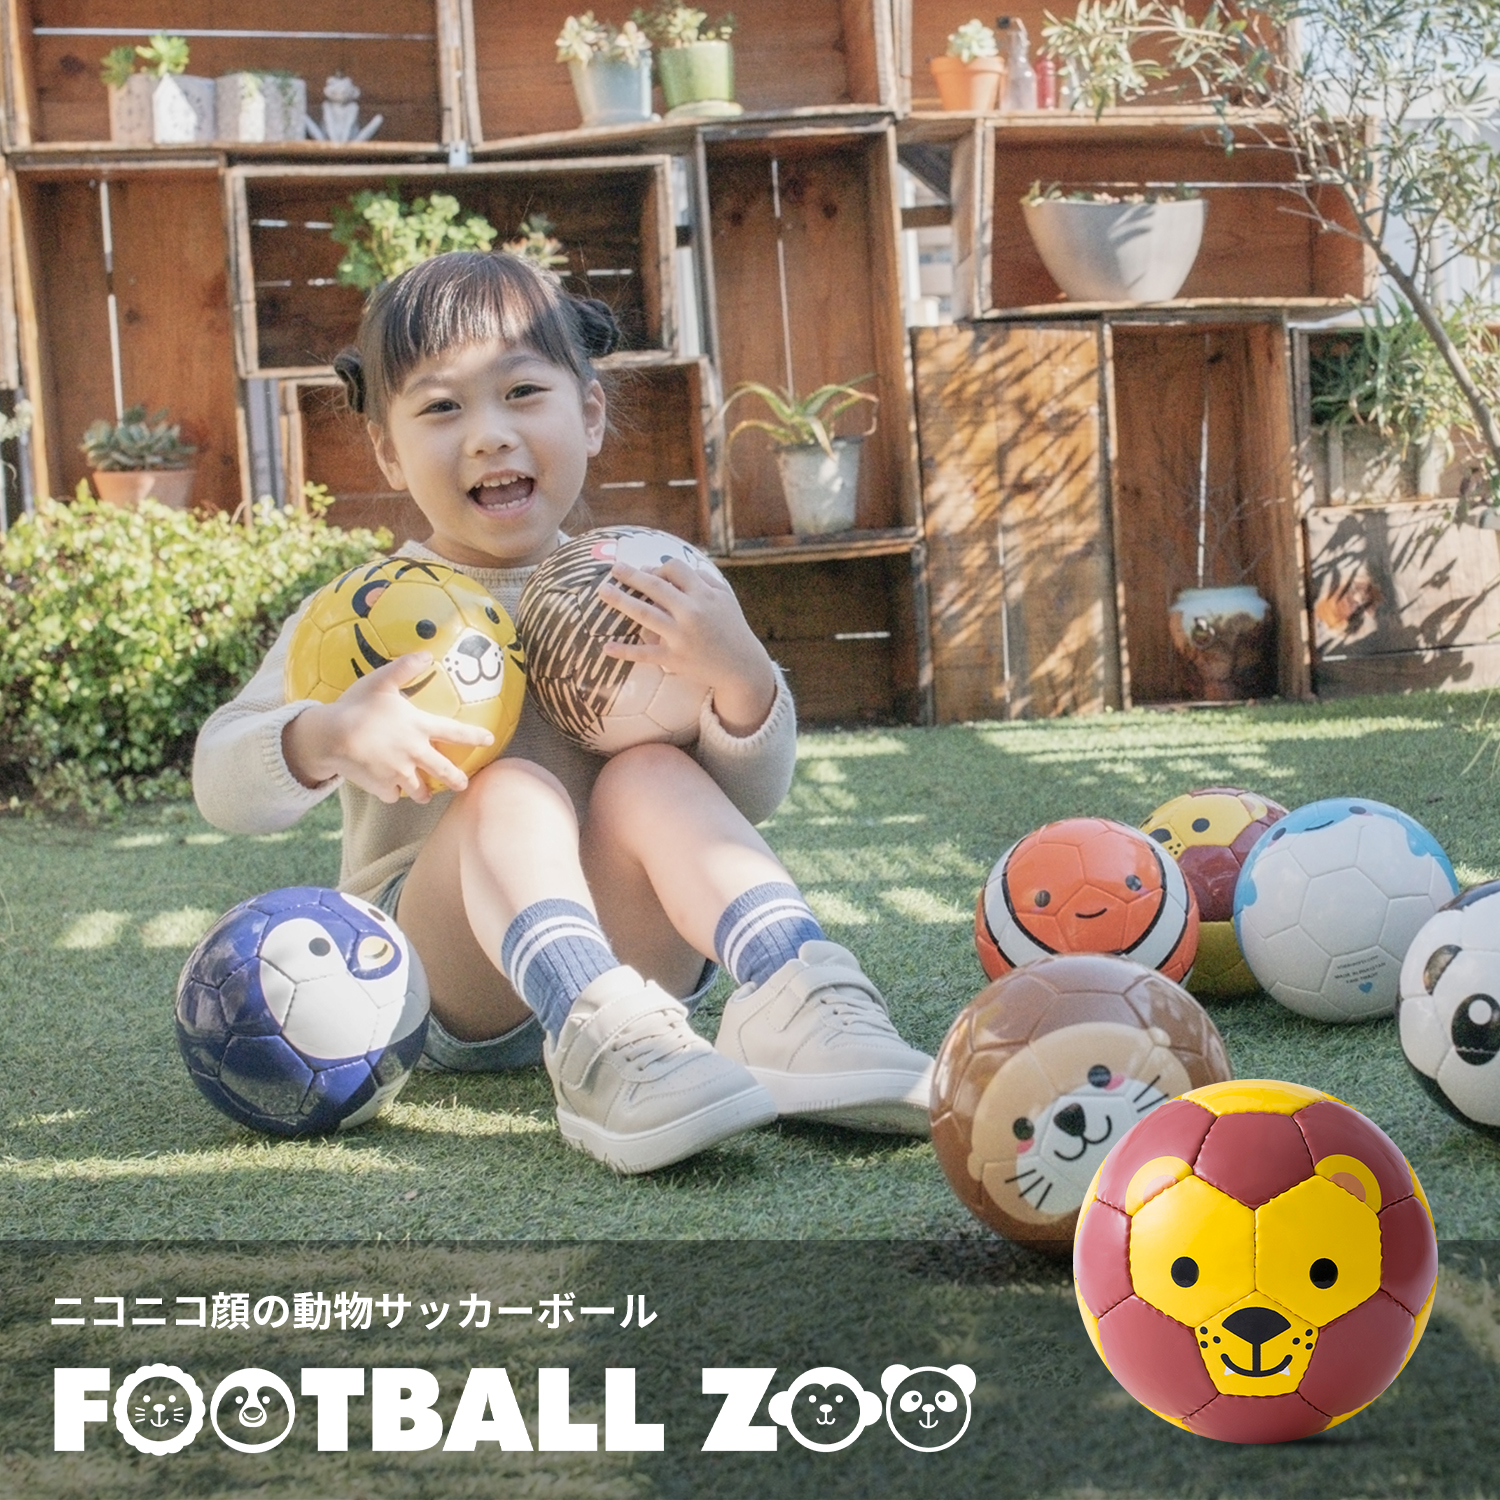 FOOTBALL ZOO | FOOTBALL ZOO BABY